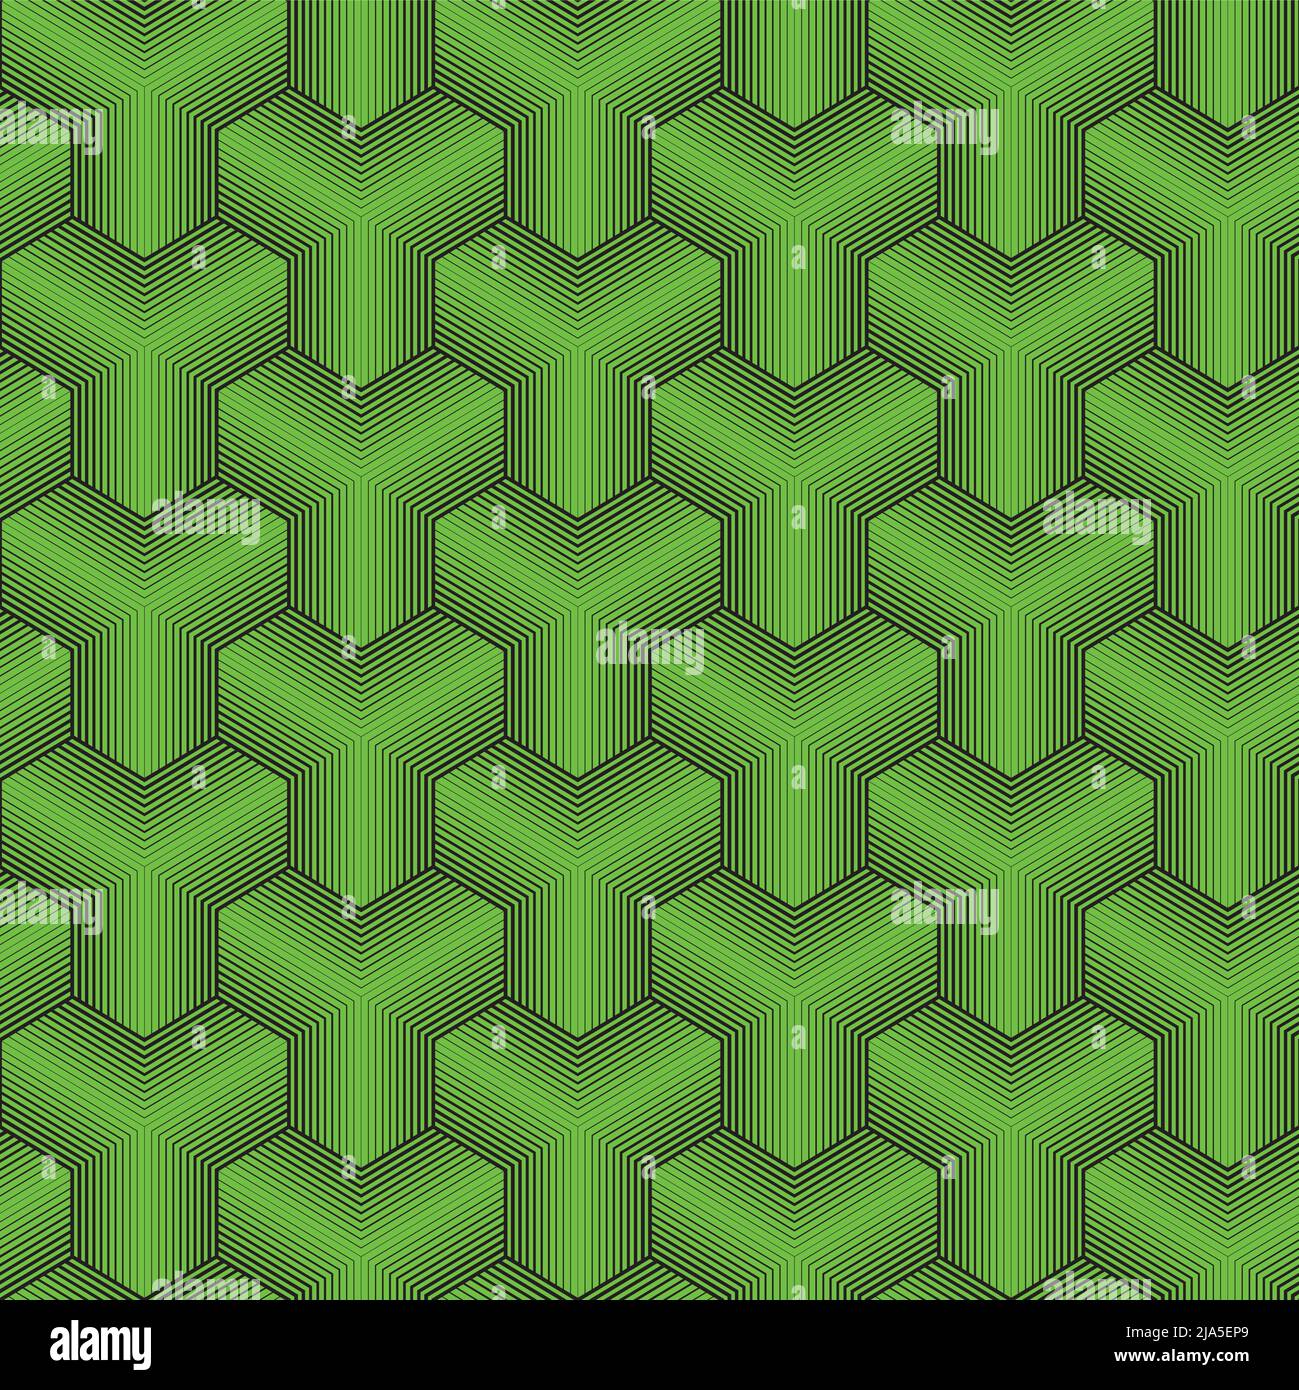 Dünne Linien Cubes Nahtloses Isometrisches Muster. Vektor kachelbarer Hintergrund in grüner Farbe Stock Vektor